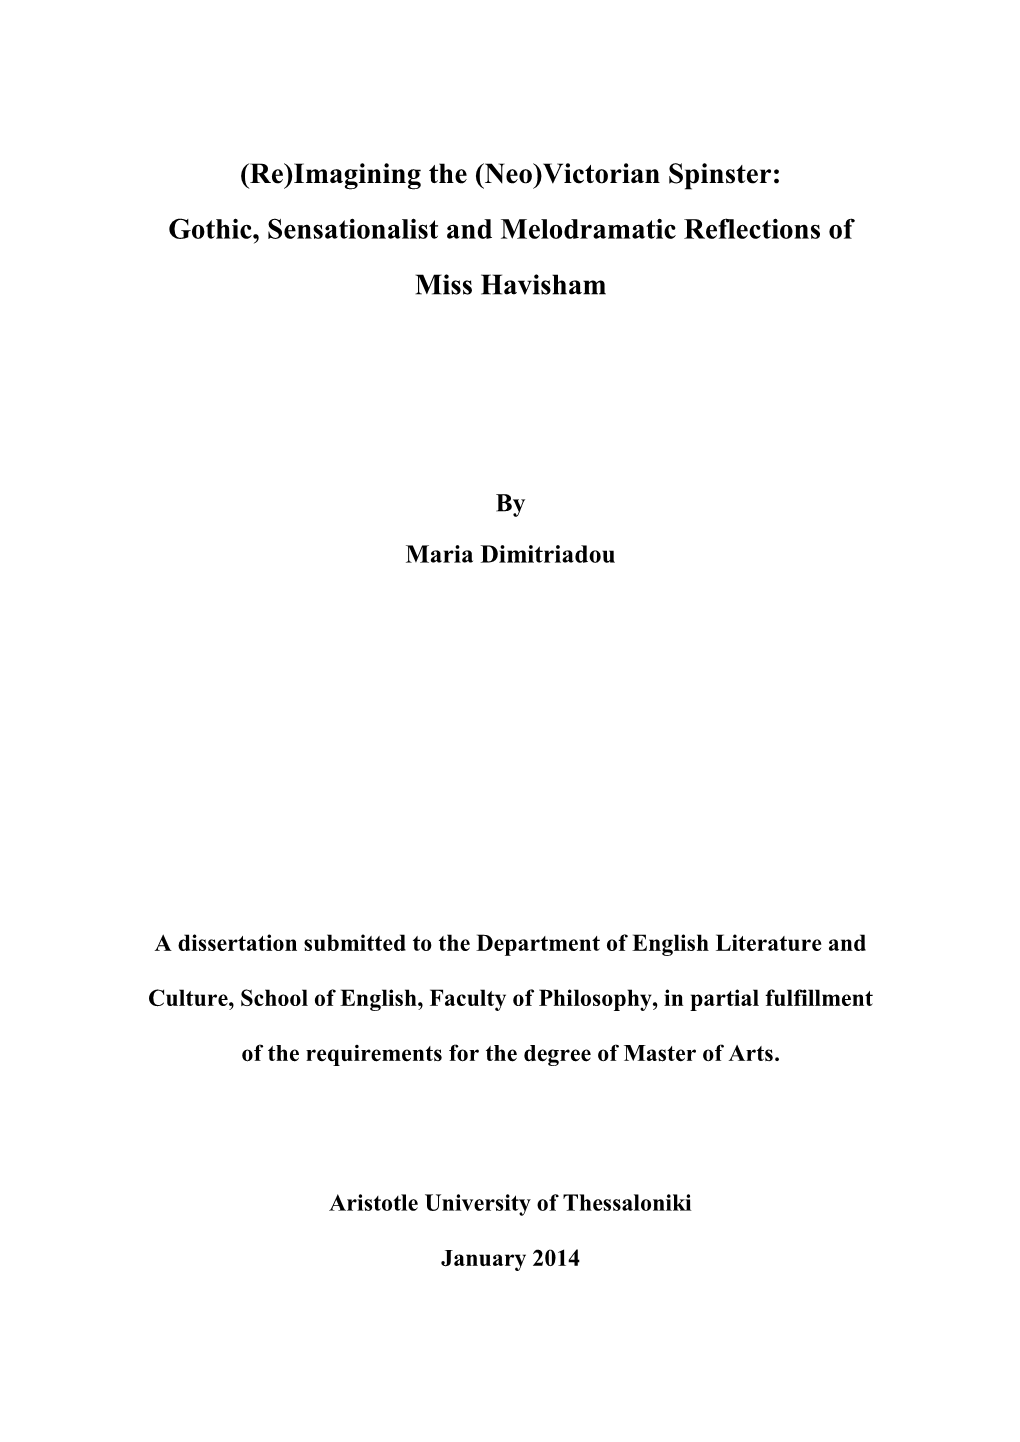 Gothic, Sensationalist and Melodramatic Reflections of Miss Havisham